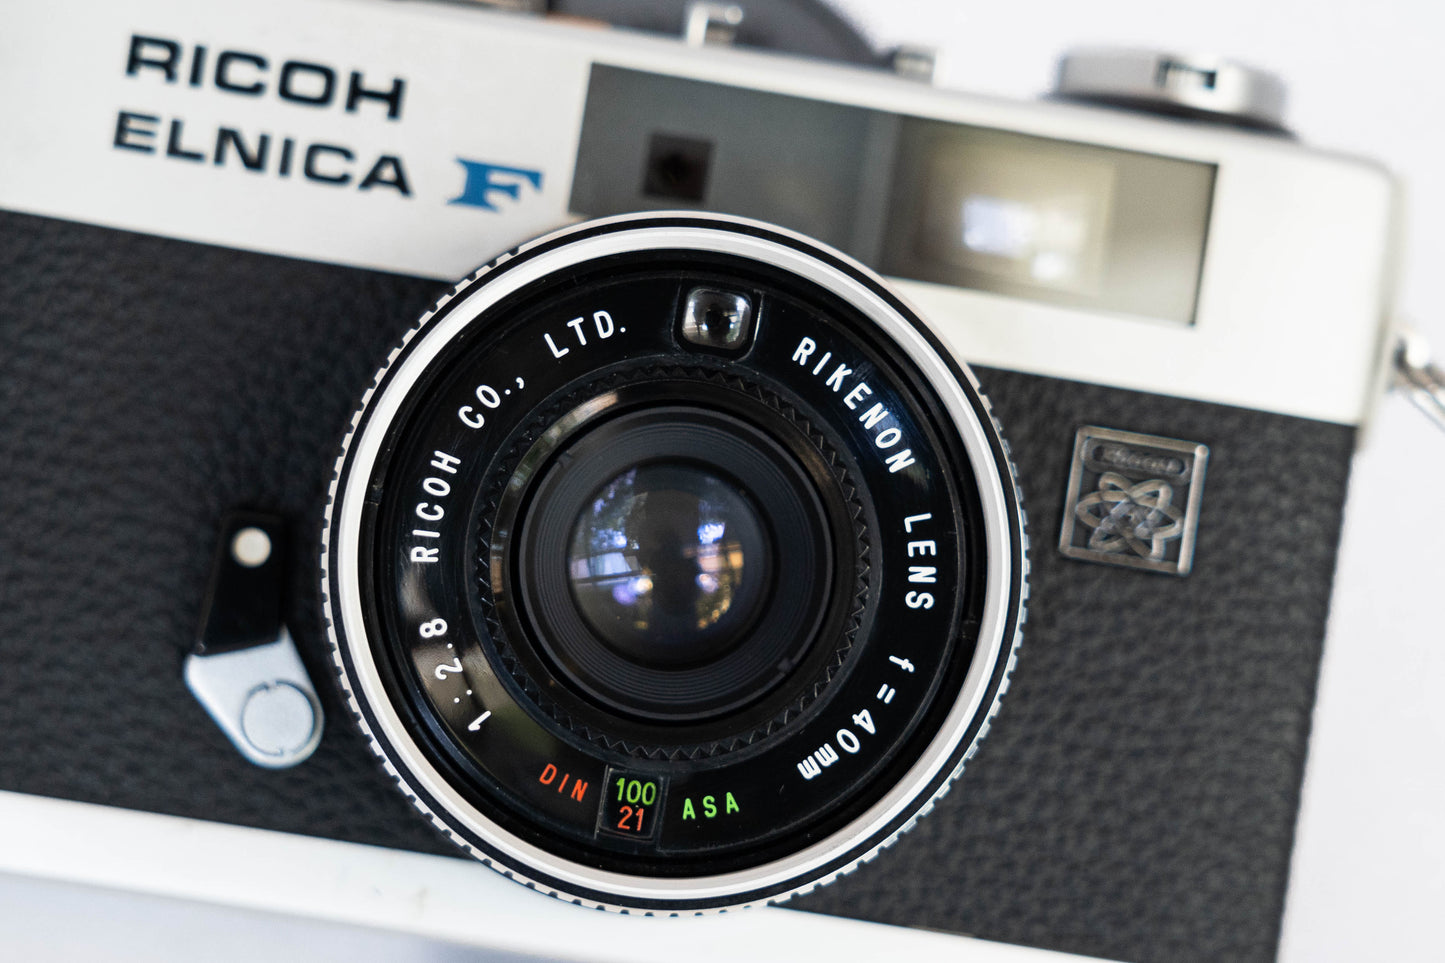 Ricoh Elnica F 35mm Film Rangefinder Camera Rikenon 40mm f2.8